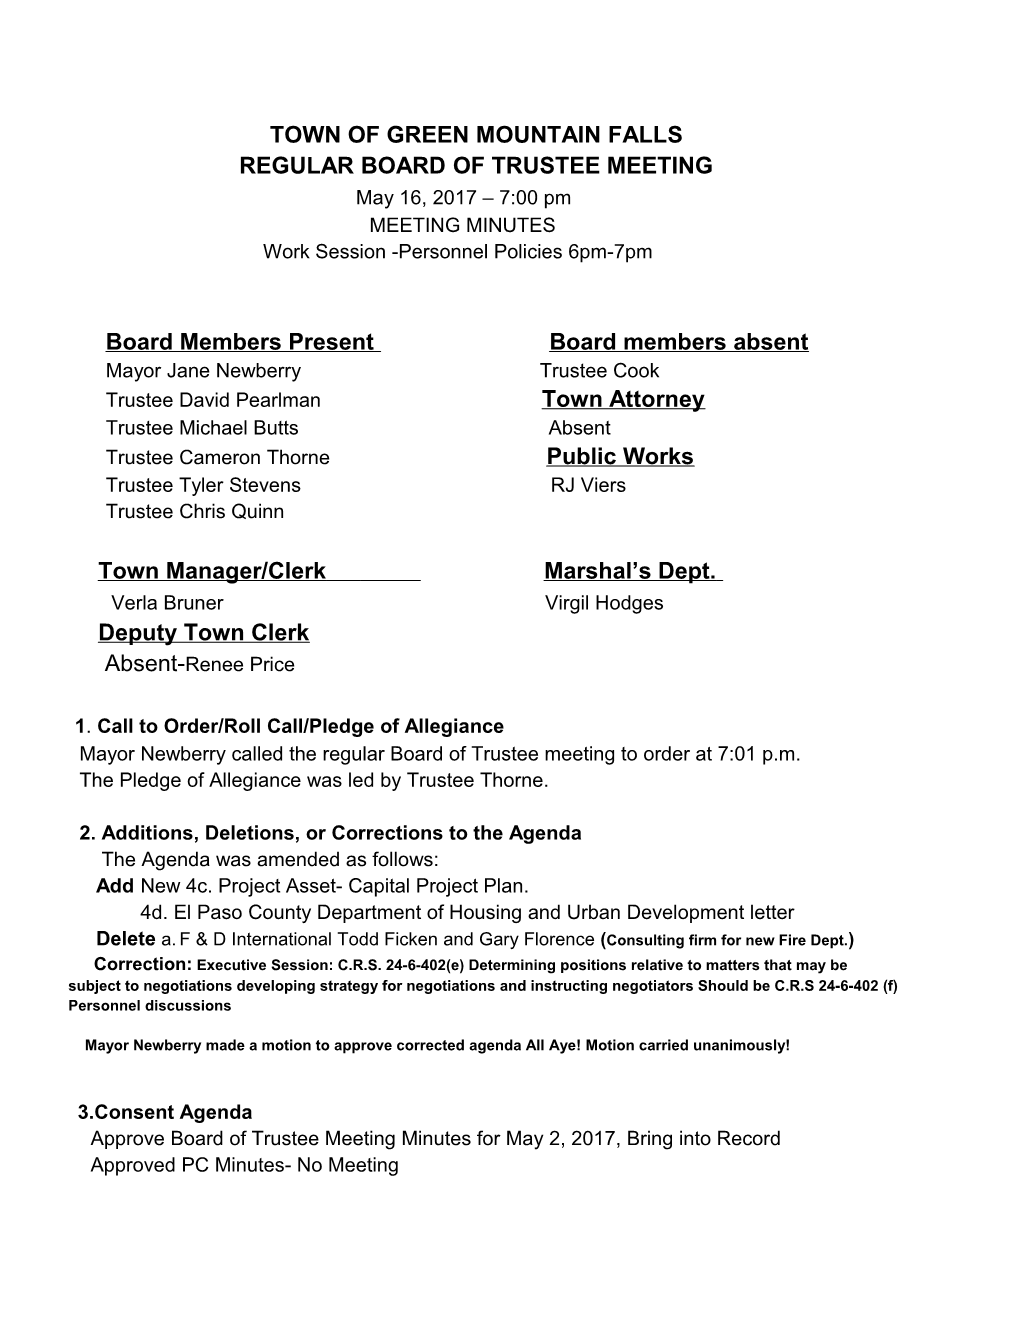 Regular Board of Trustee Meeting